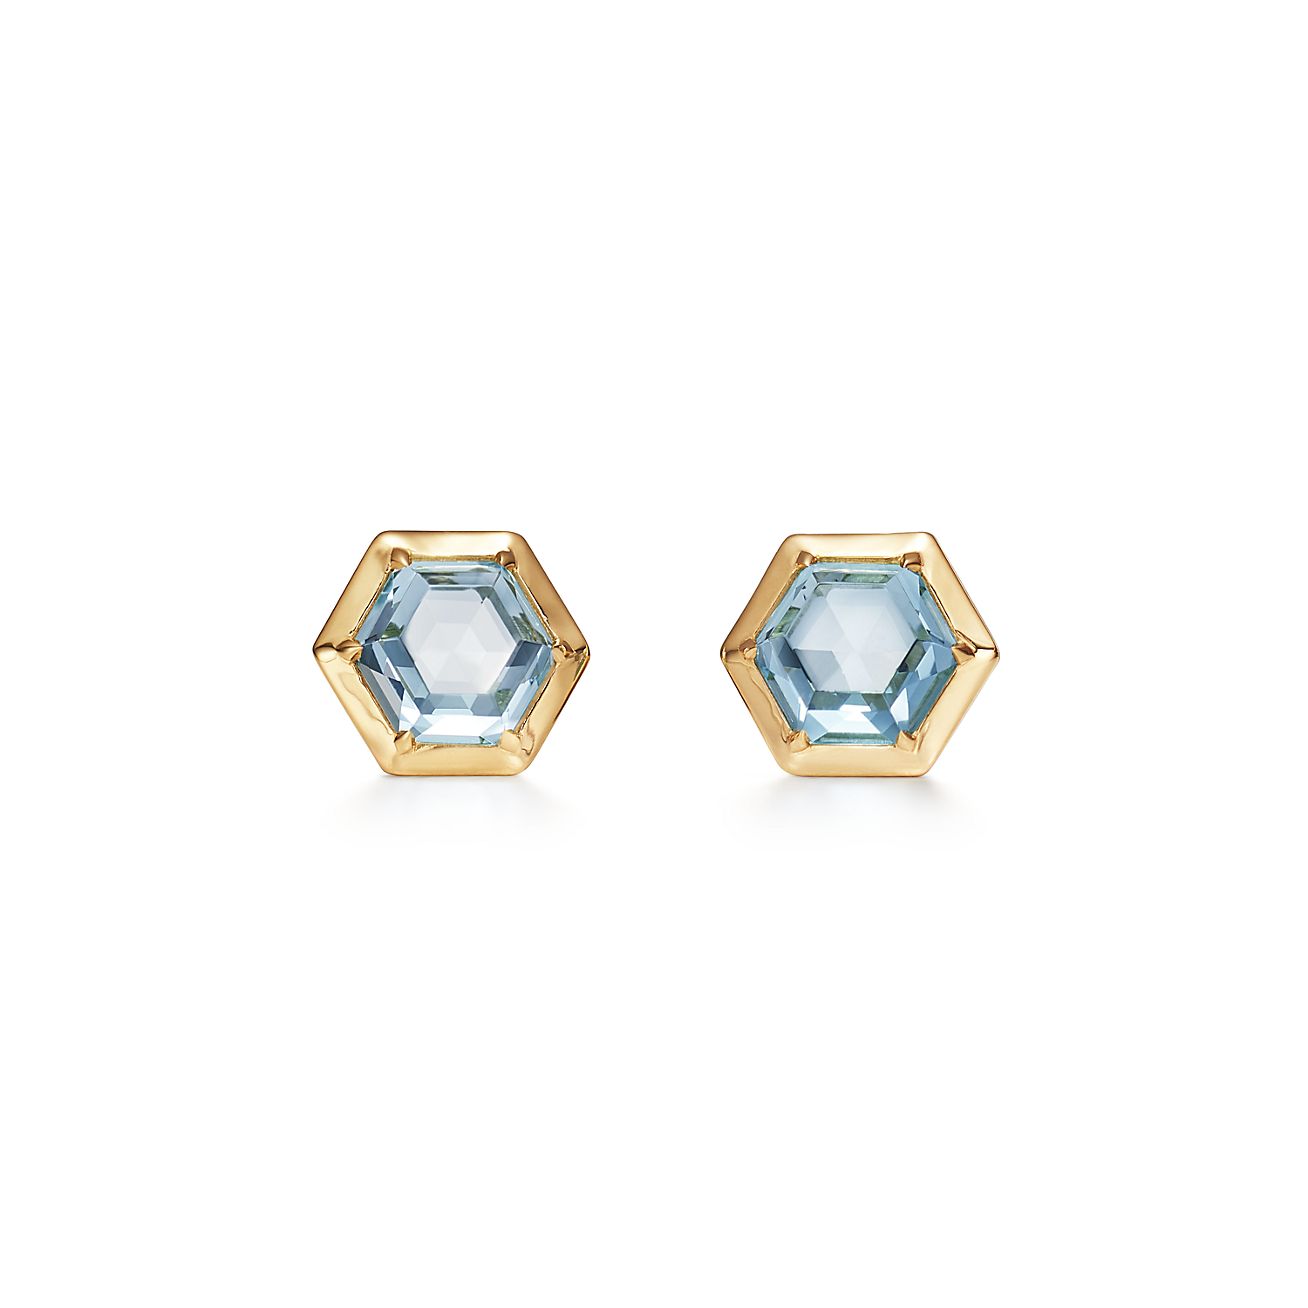 Studio hexagon earrings in 18k gold 